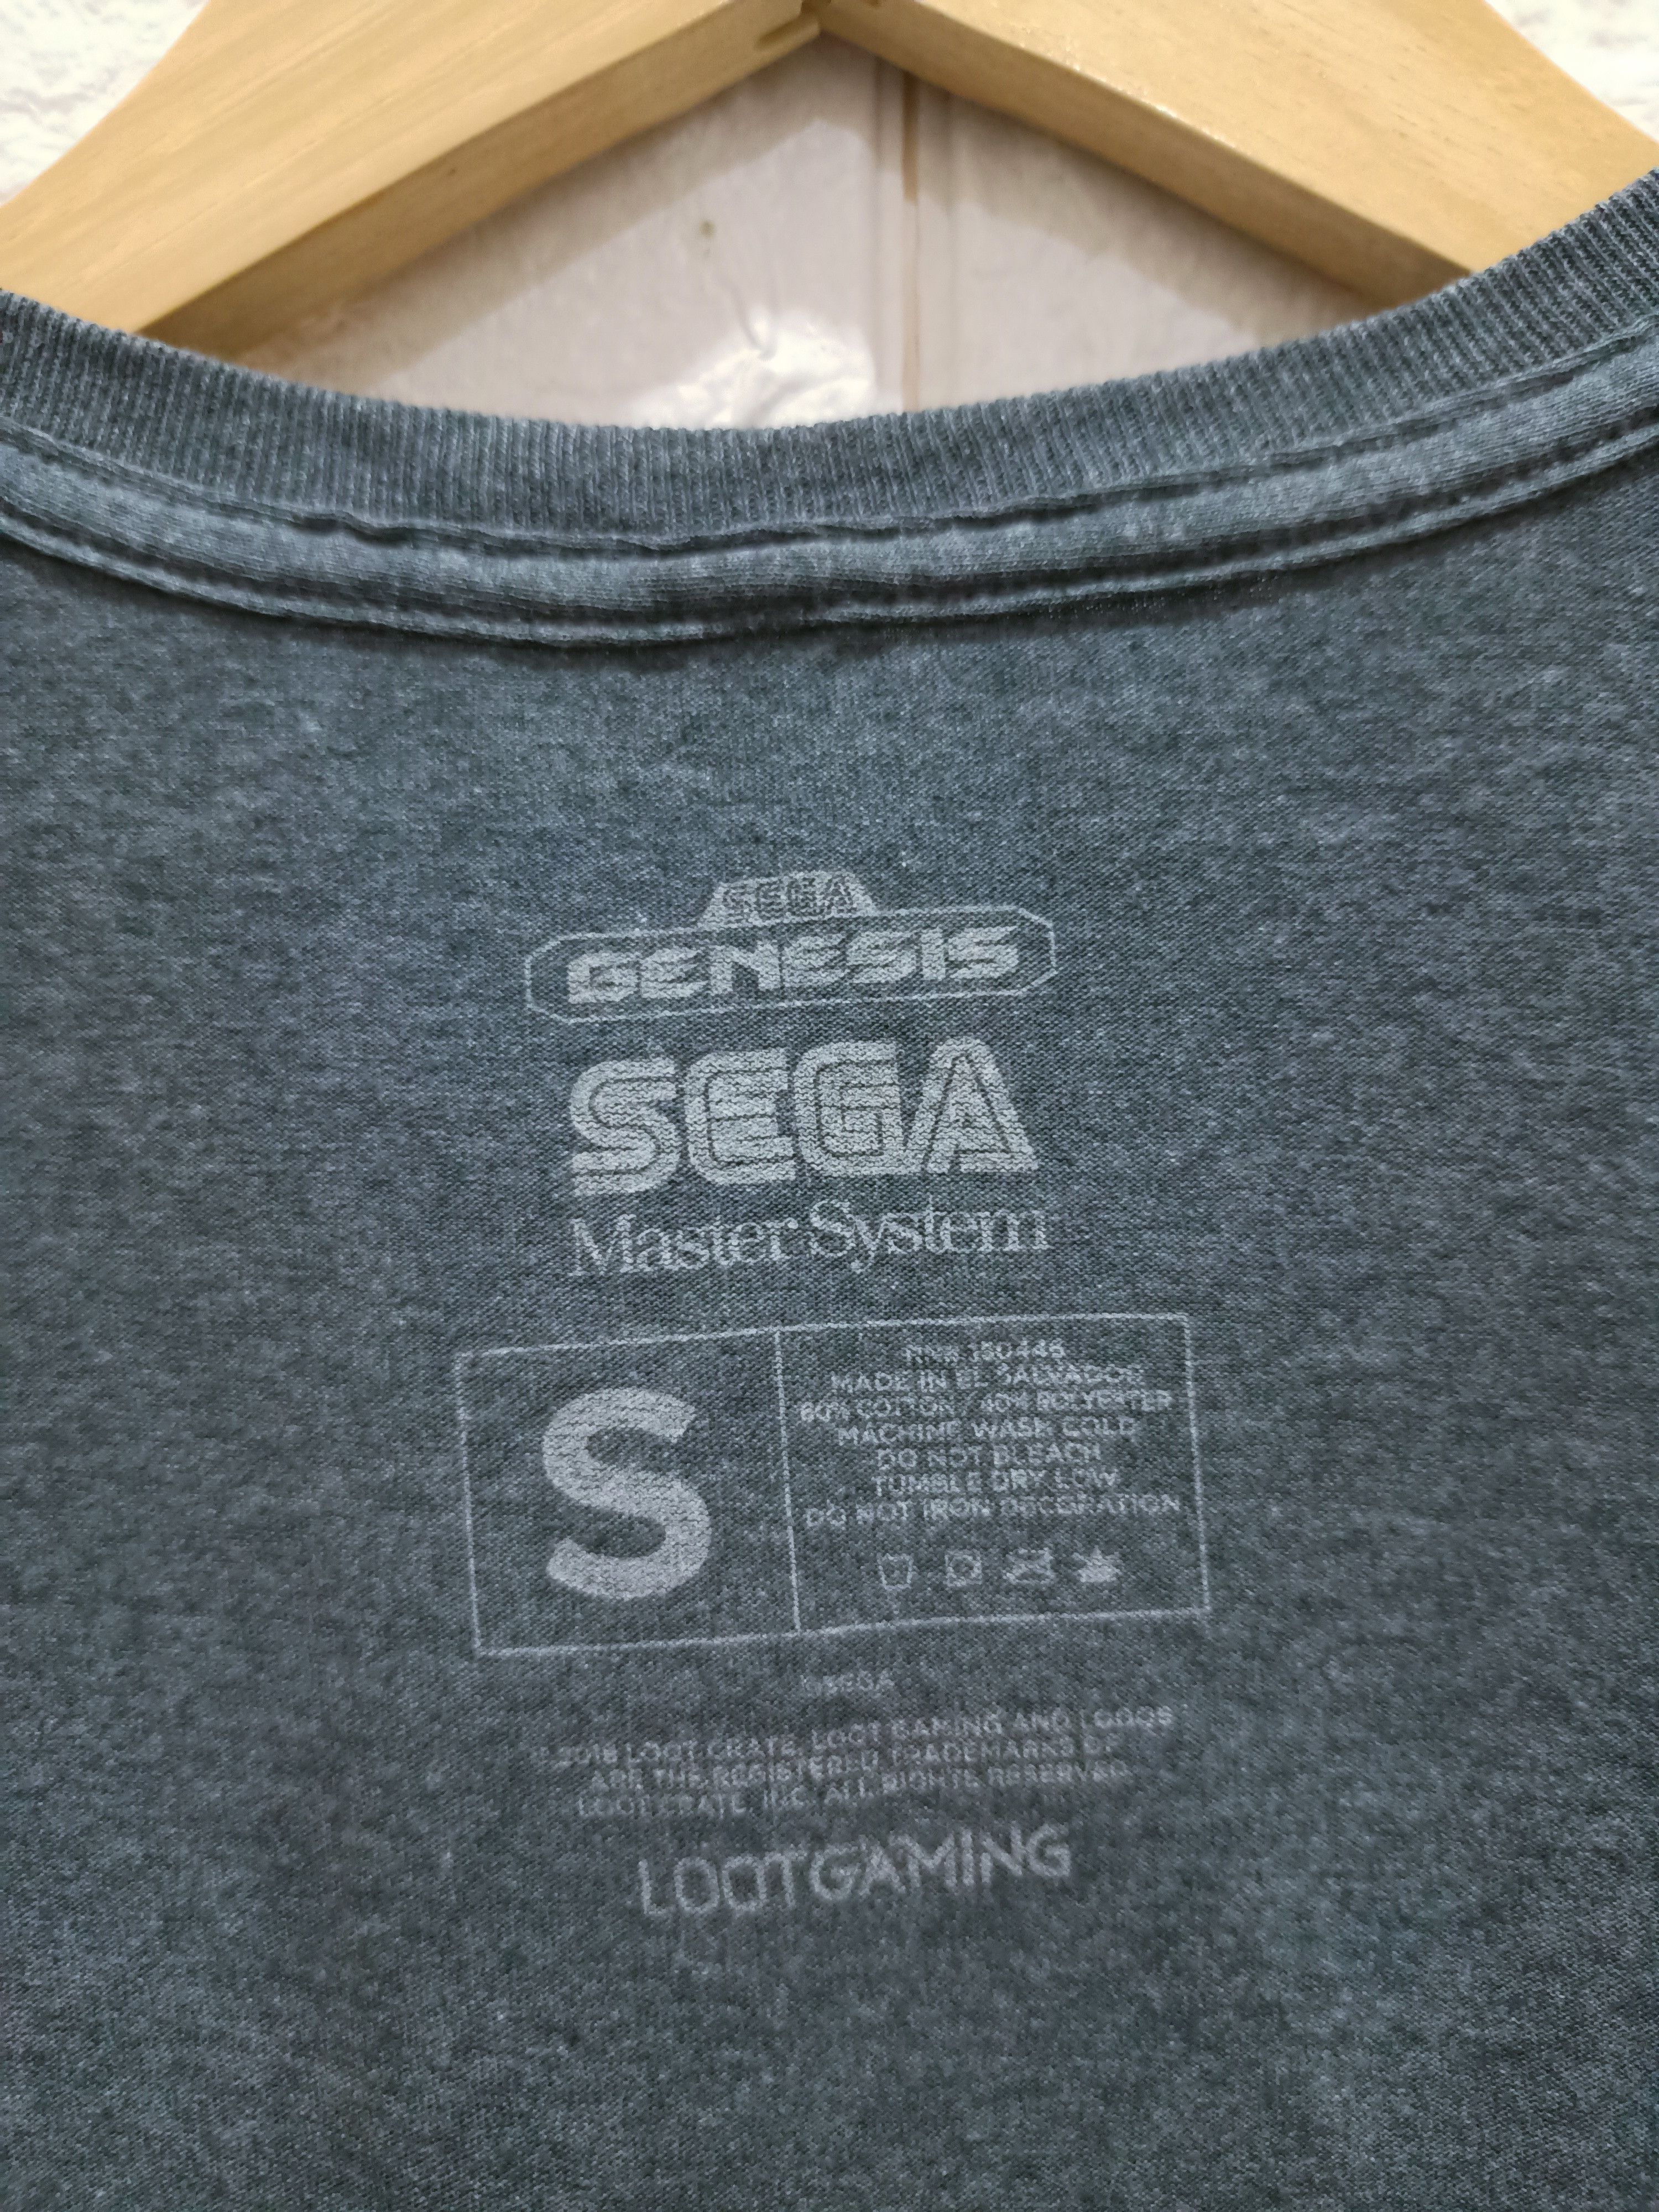 Streetwear - Sega Genesis Master System Loot Gaming Tee - 6